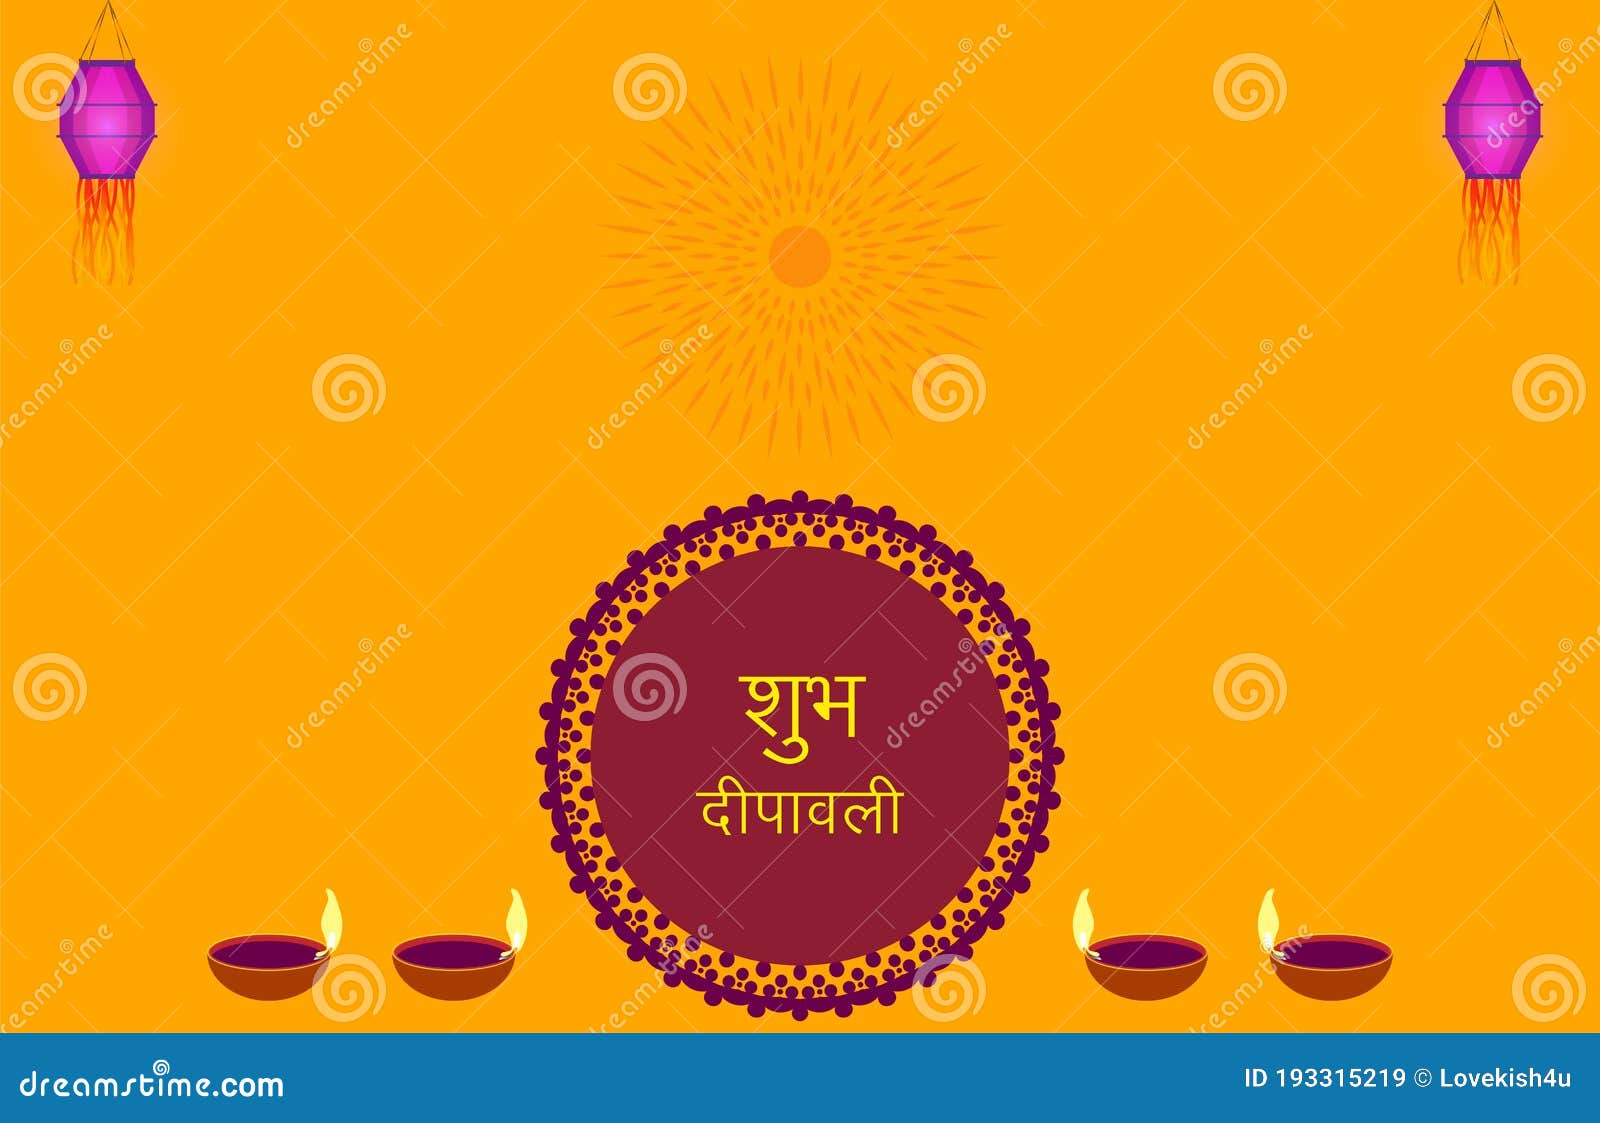 Happy Diwali Festival. Diwali Holiday Background with Rangoli, Diwali  Celebration Greeting Card Stock Vector - Illustration of candle, golden:  193315219